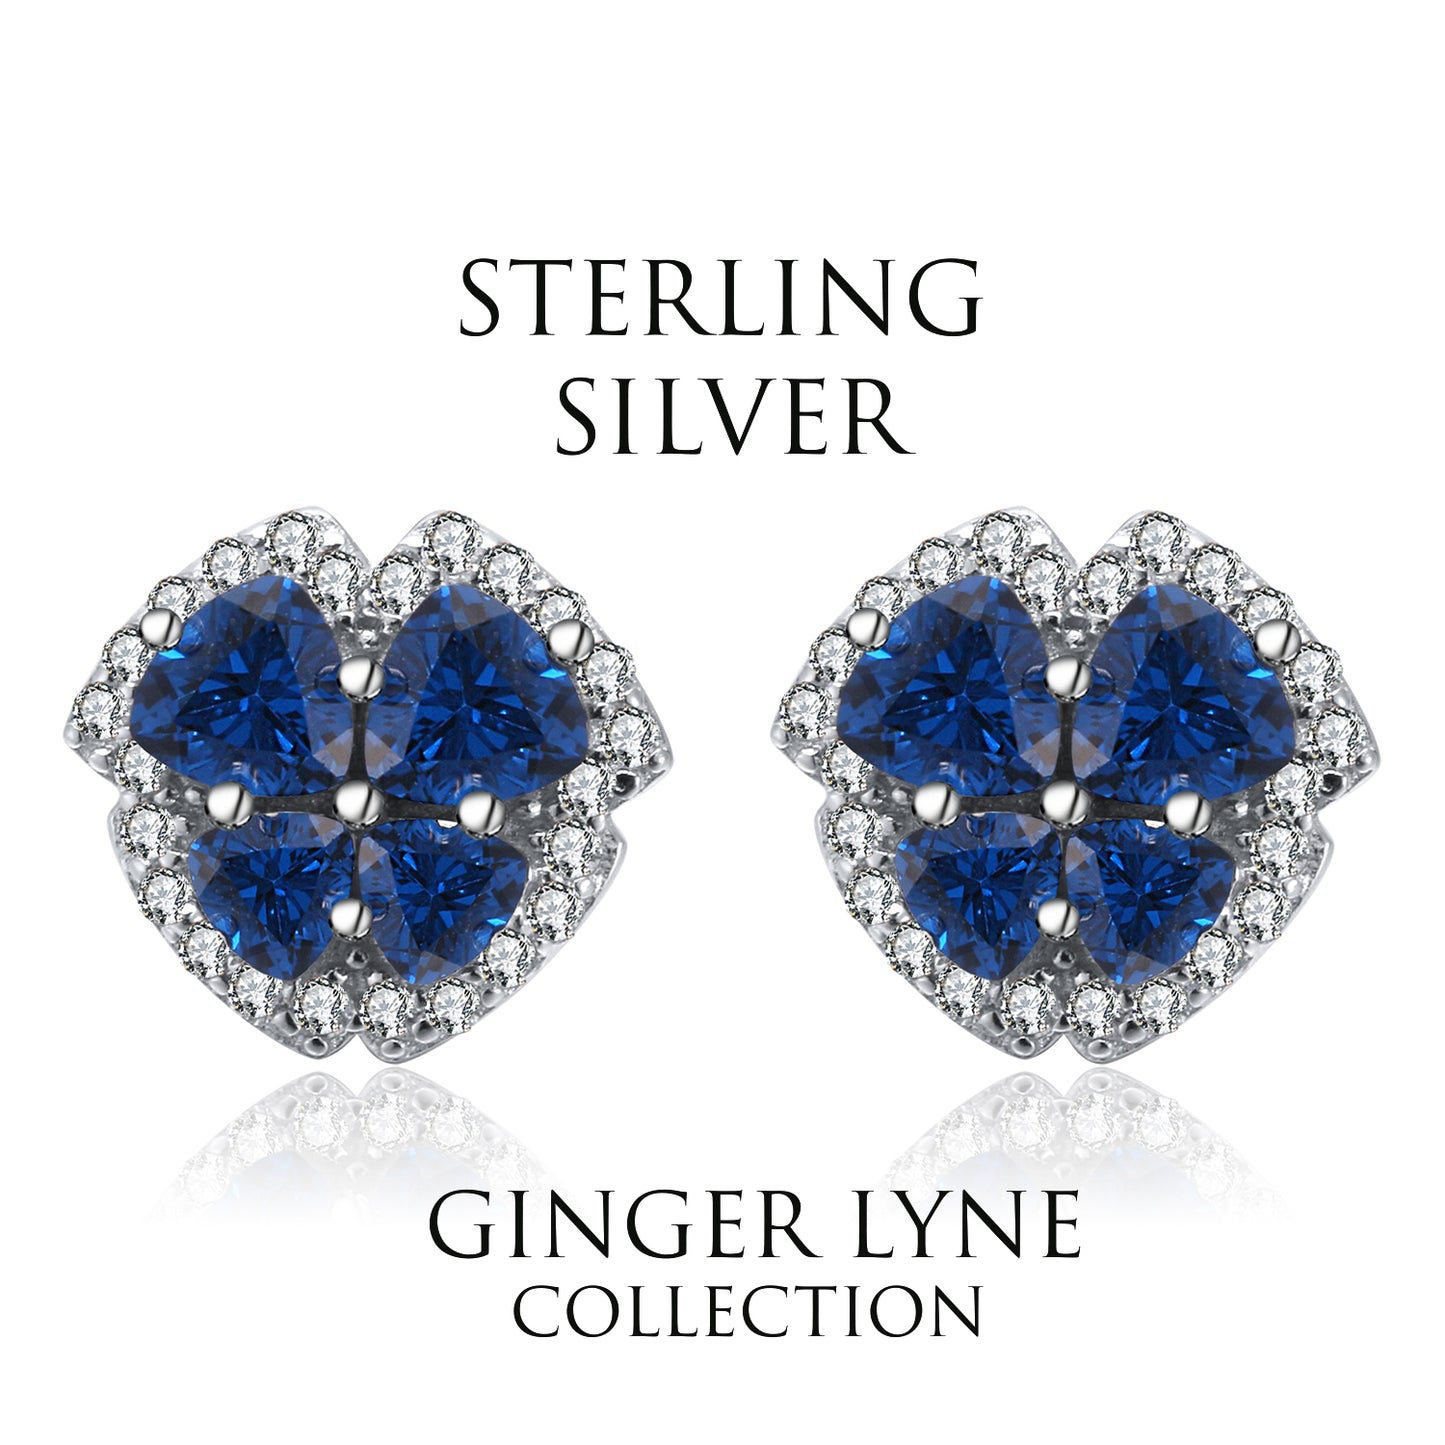 Halo Stud Earrings for Women Sterling SilverLondon Blue Cz Ginger Lyne Collection